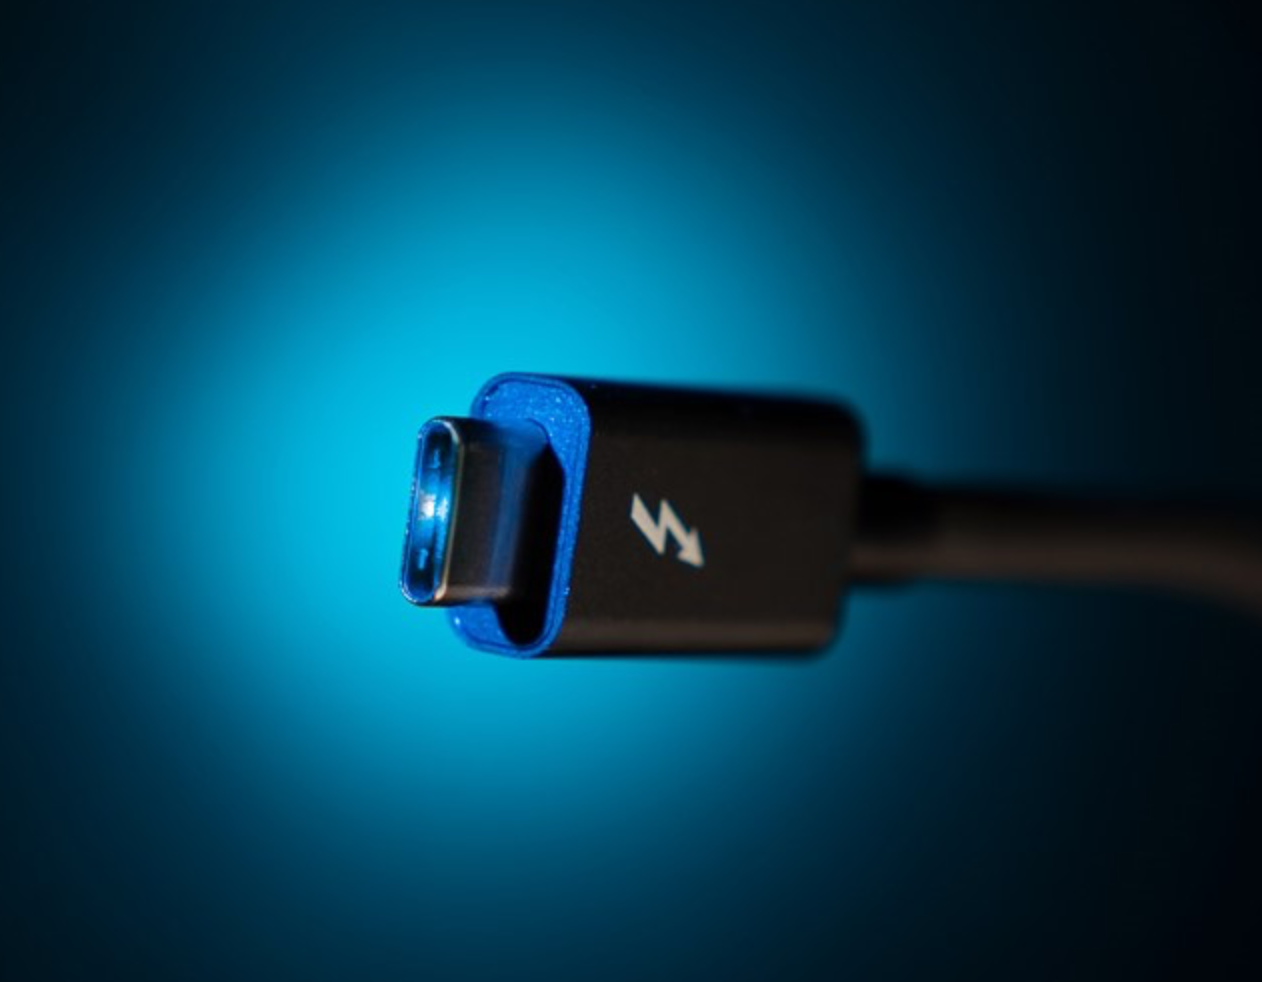 USB4 Connector (Source: Intel)